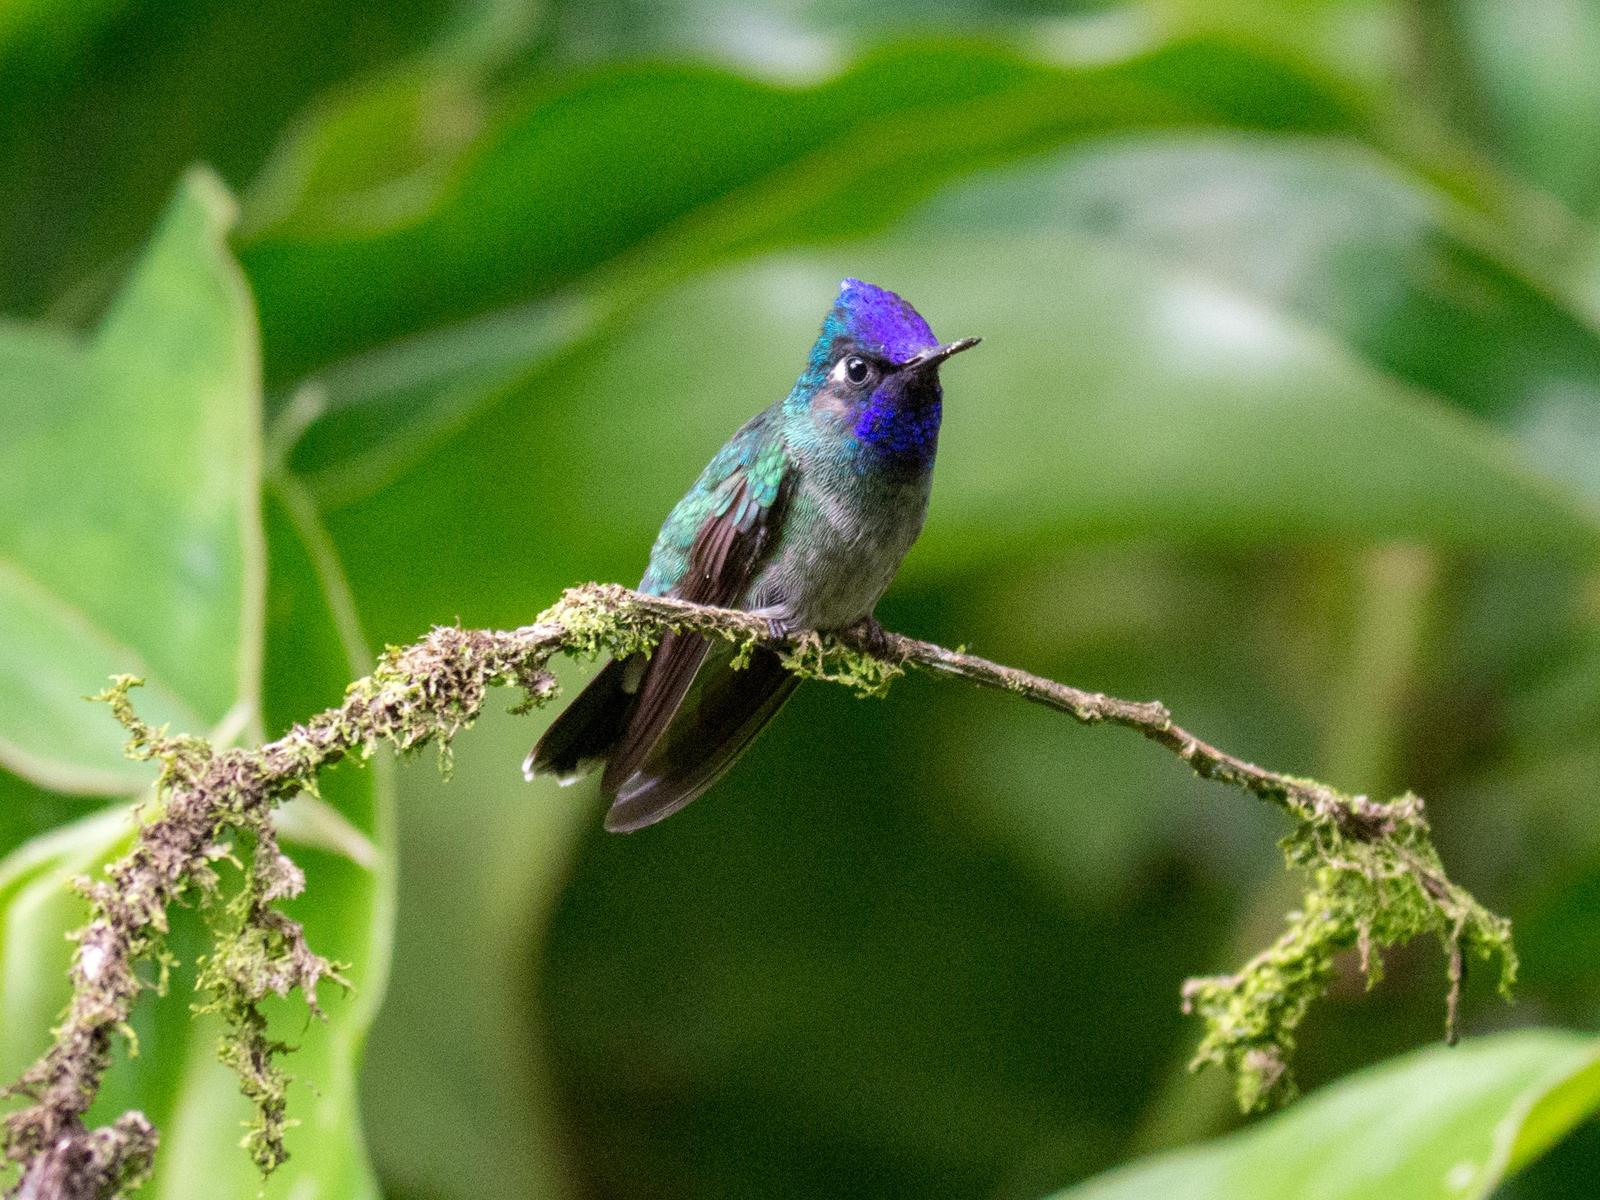 Violet-headed Hummingbird Photo by Randy Siebert